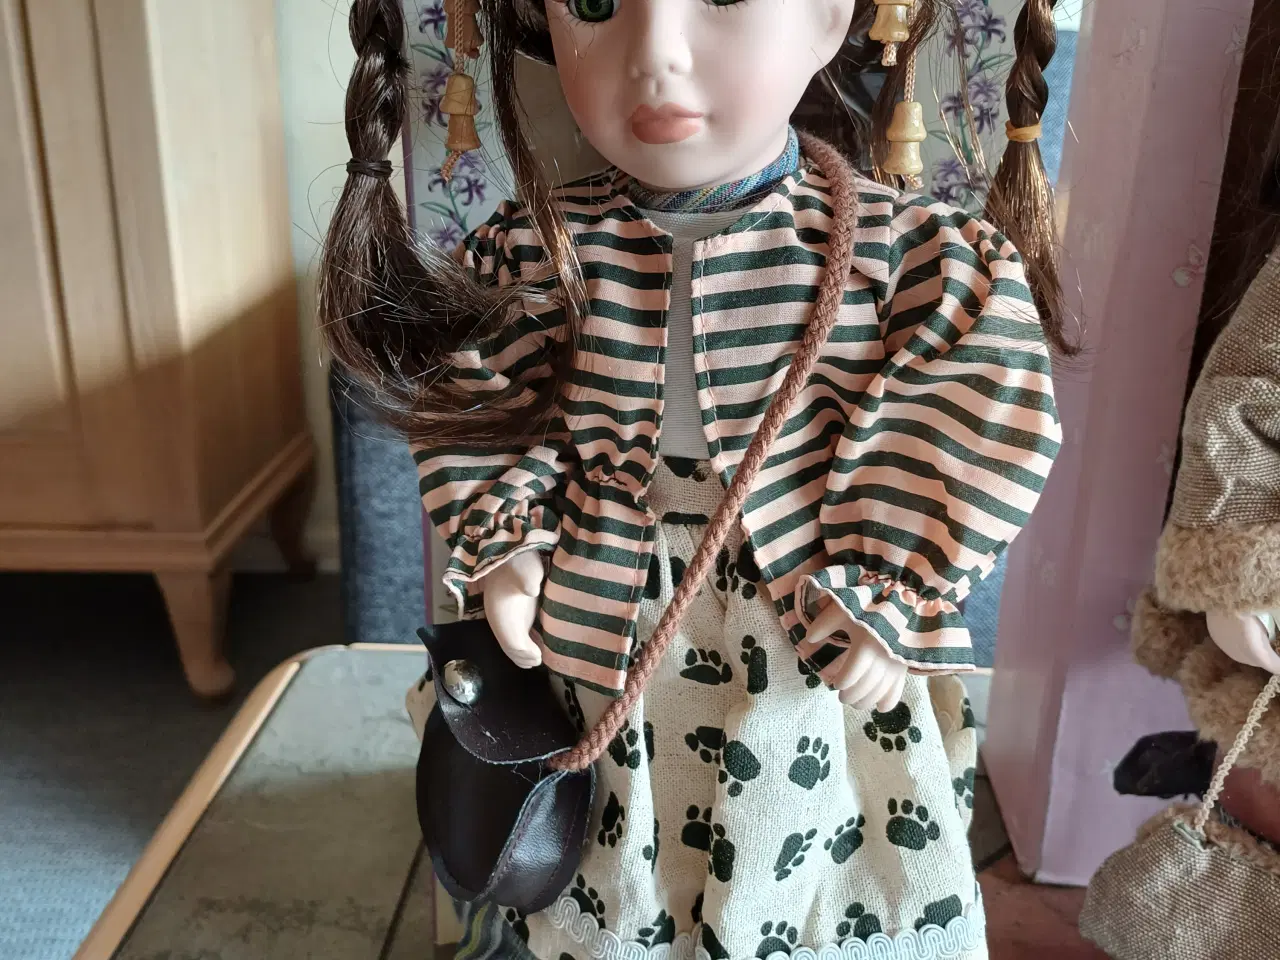 Billede 2 - Fine gamle pynte dukker